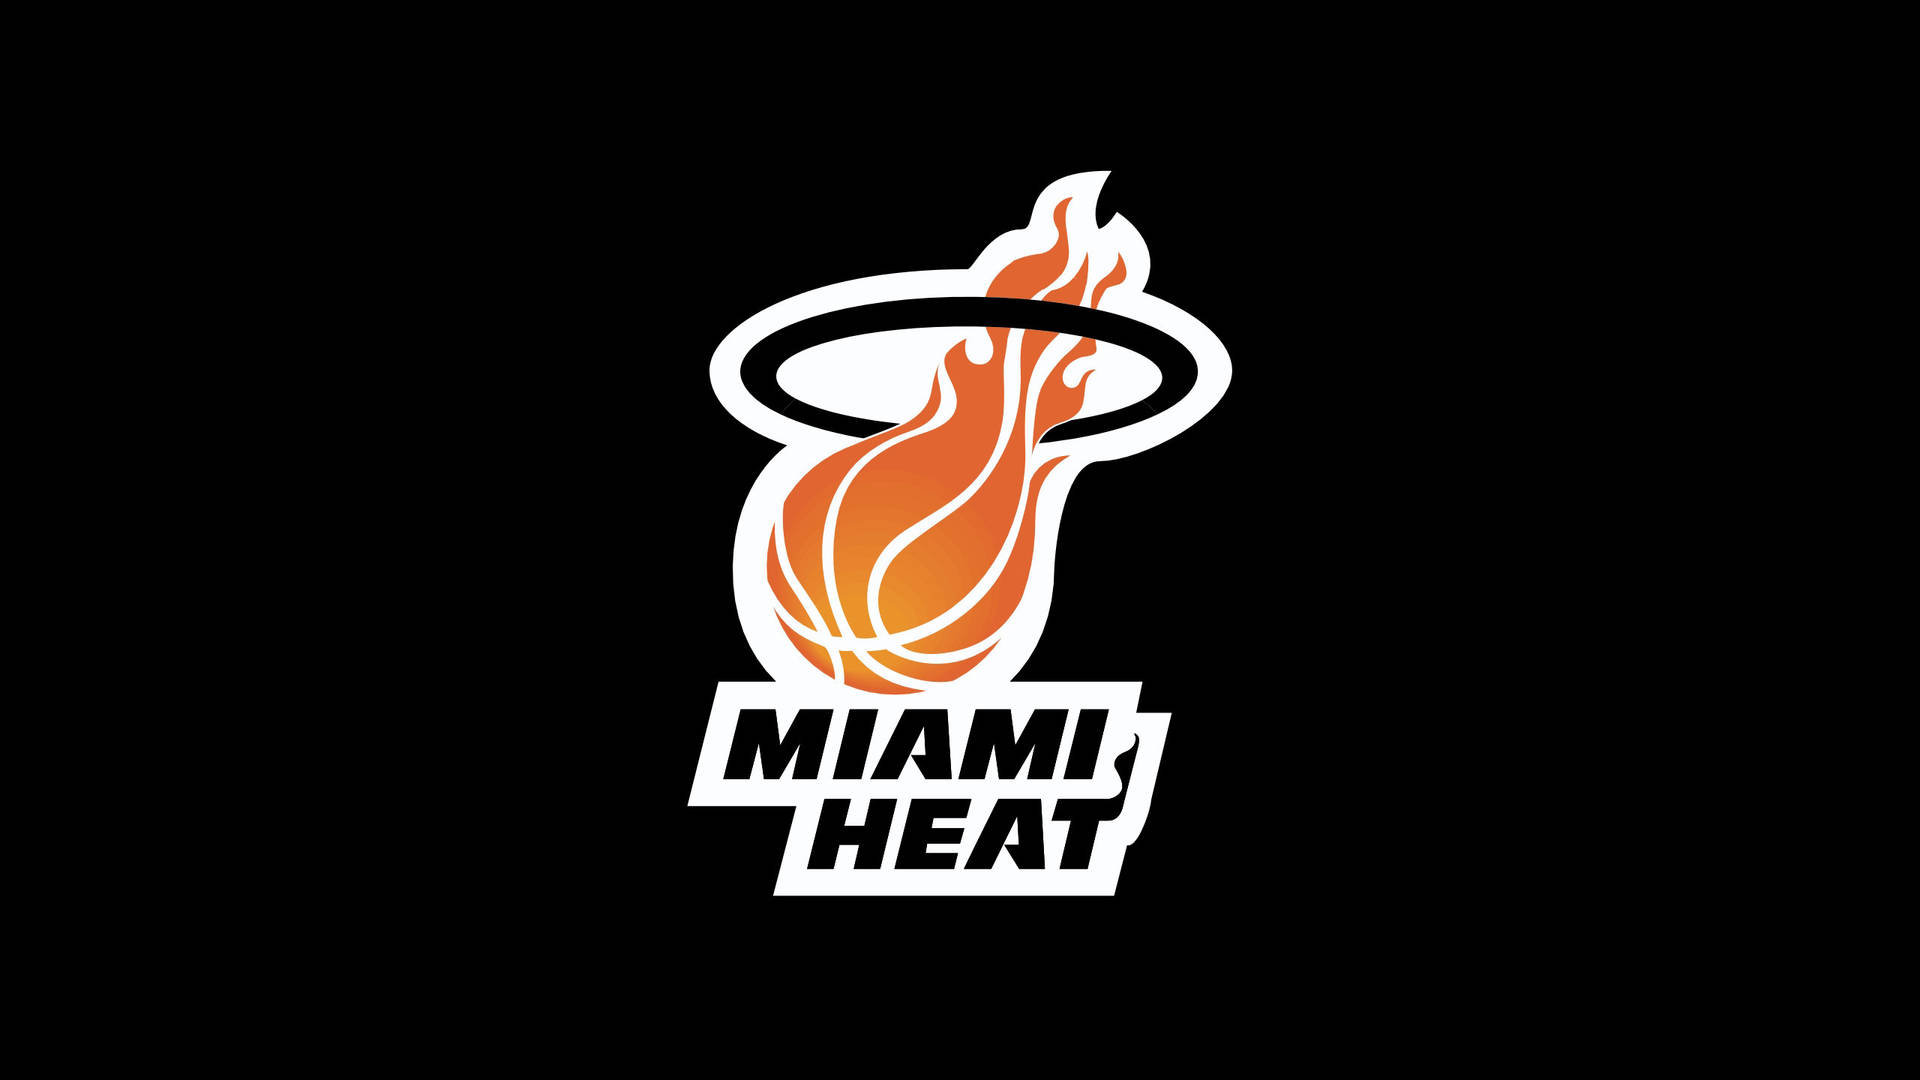 Miami Heat Poster